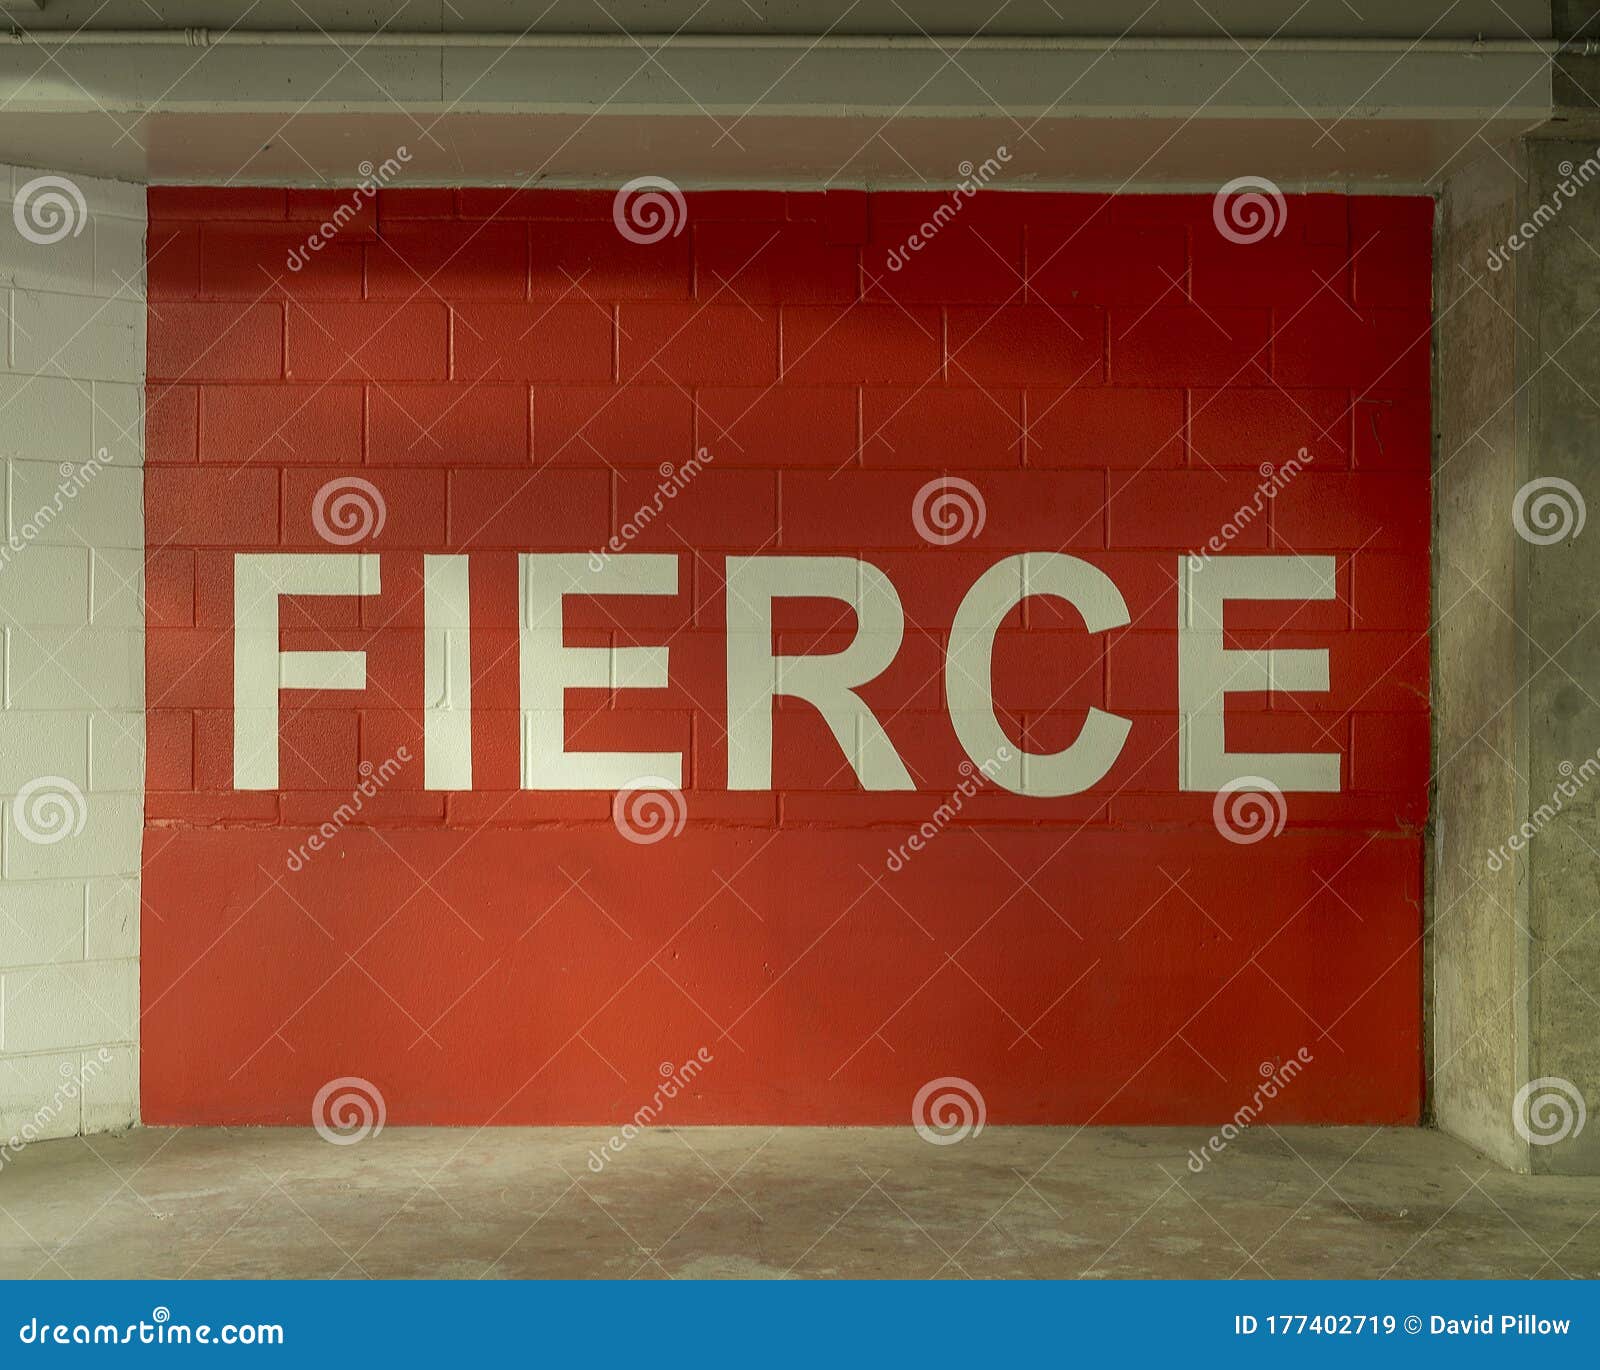 Fierce Stock Photos - 133,026 Images